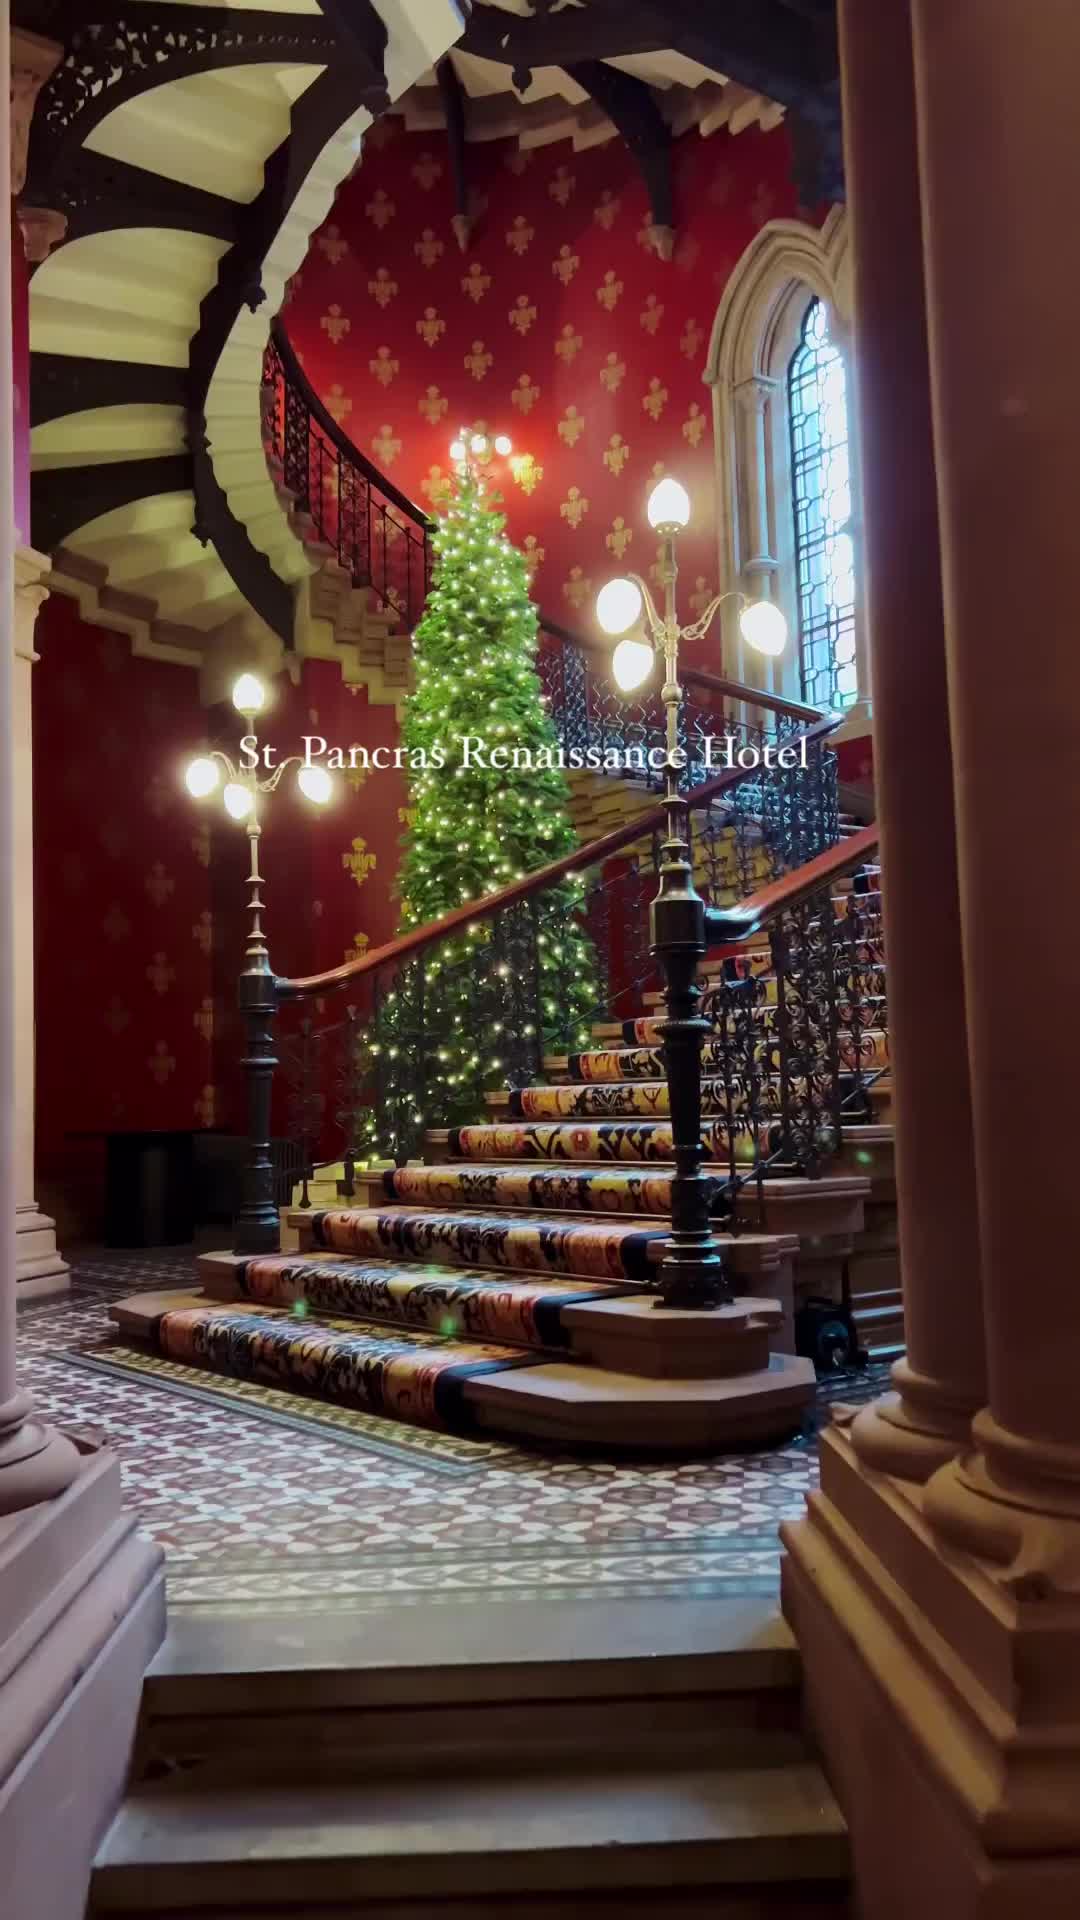 Iconic St. Pancras Renaissance Hotel in London